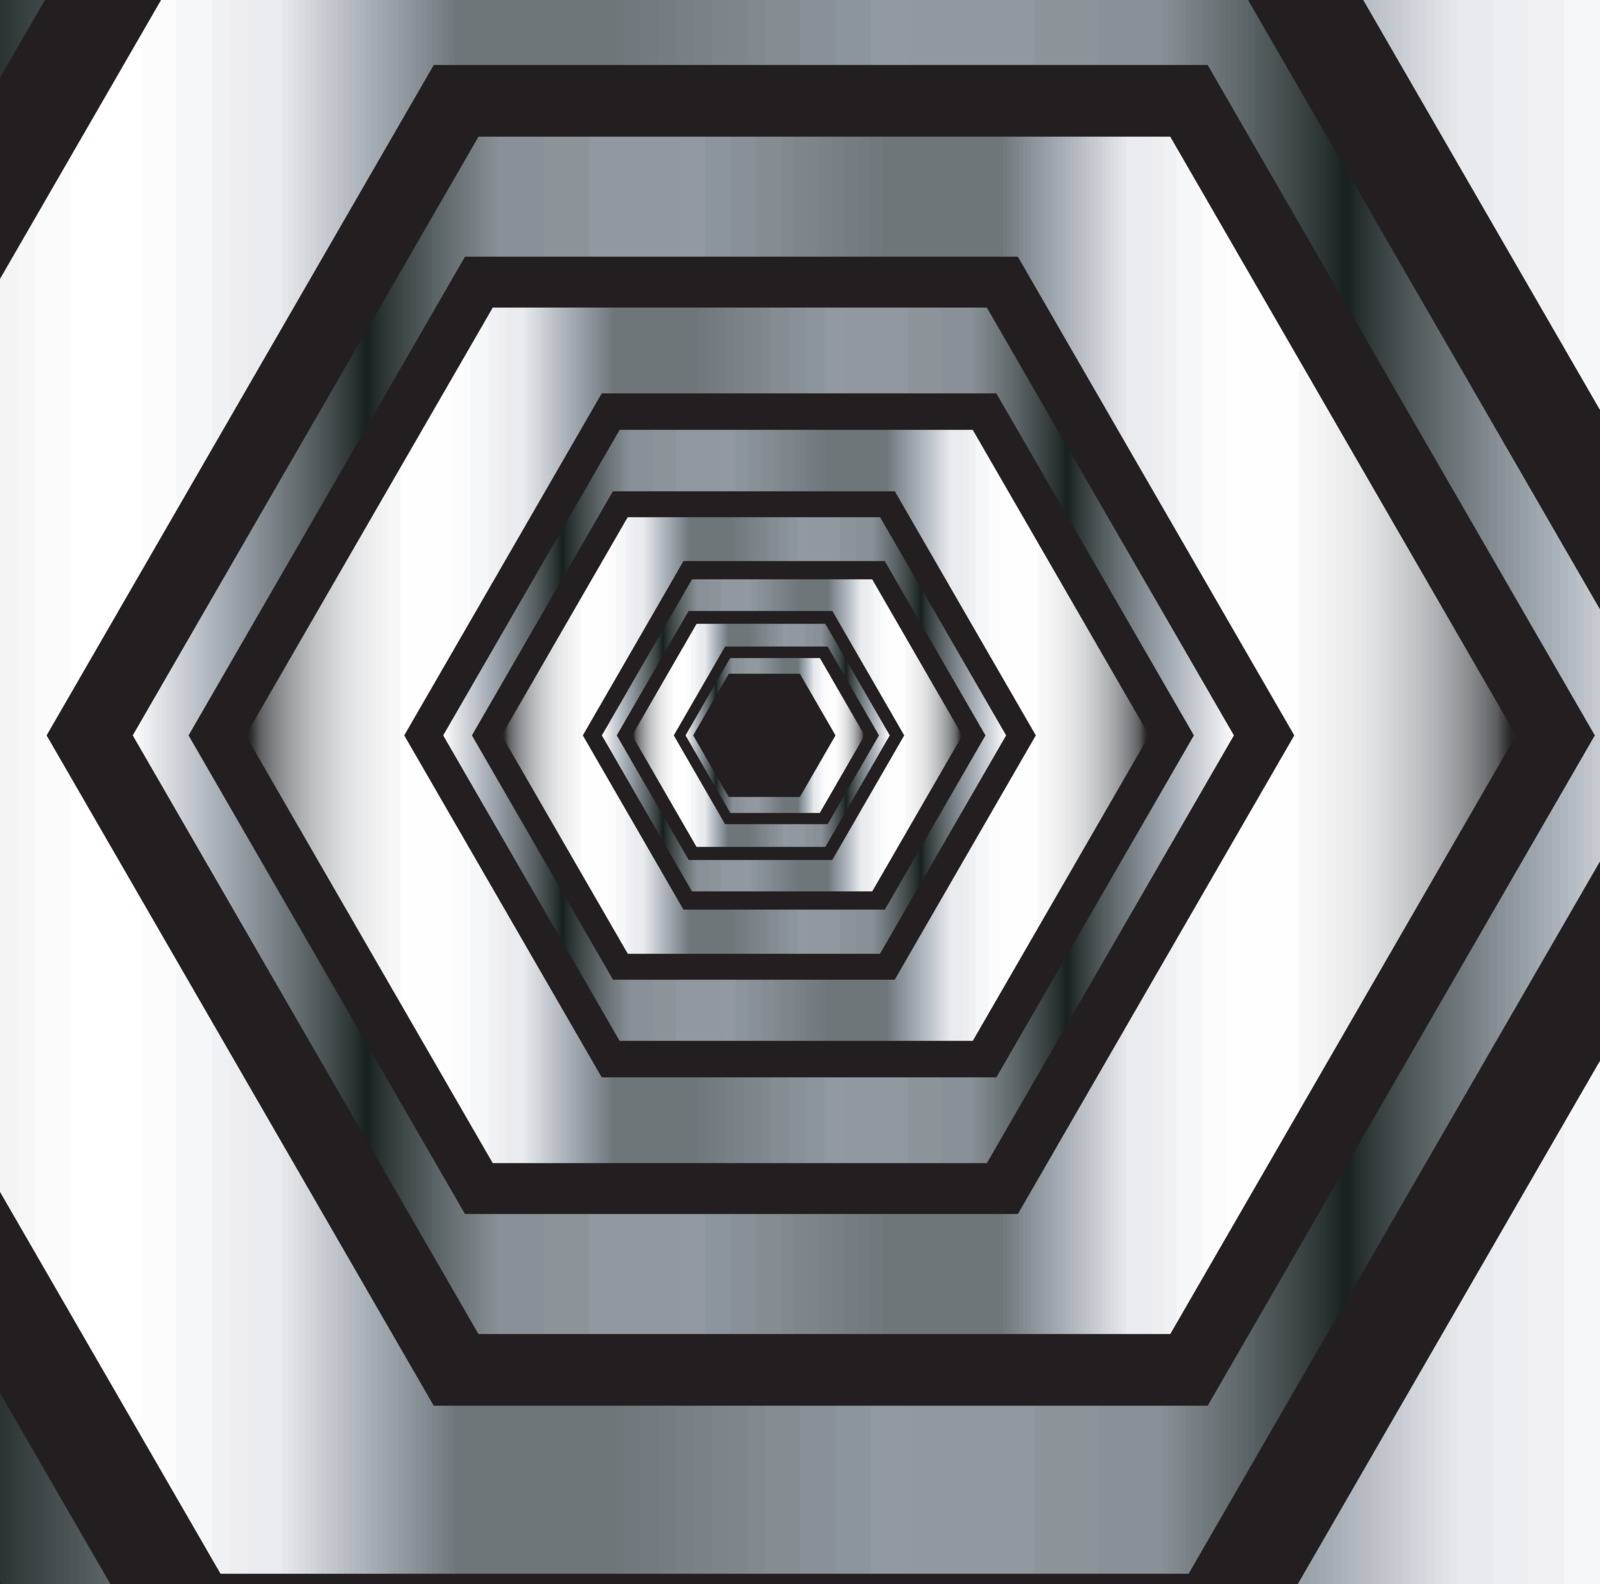 Metallic hexagonal illusion in metallic colors